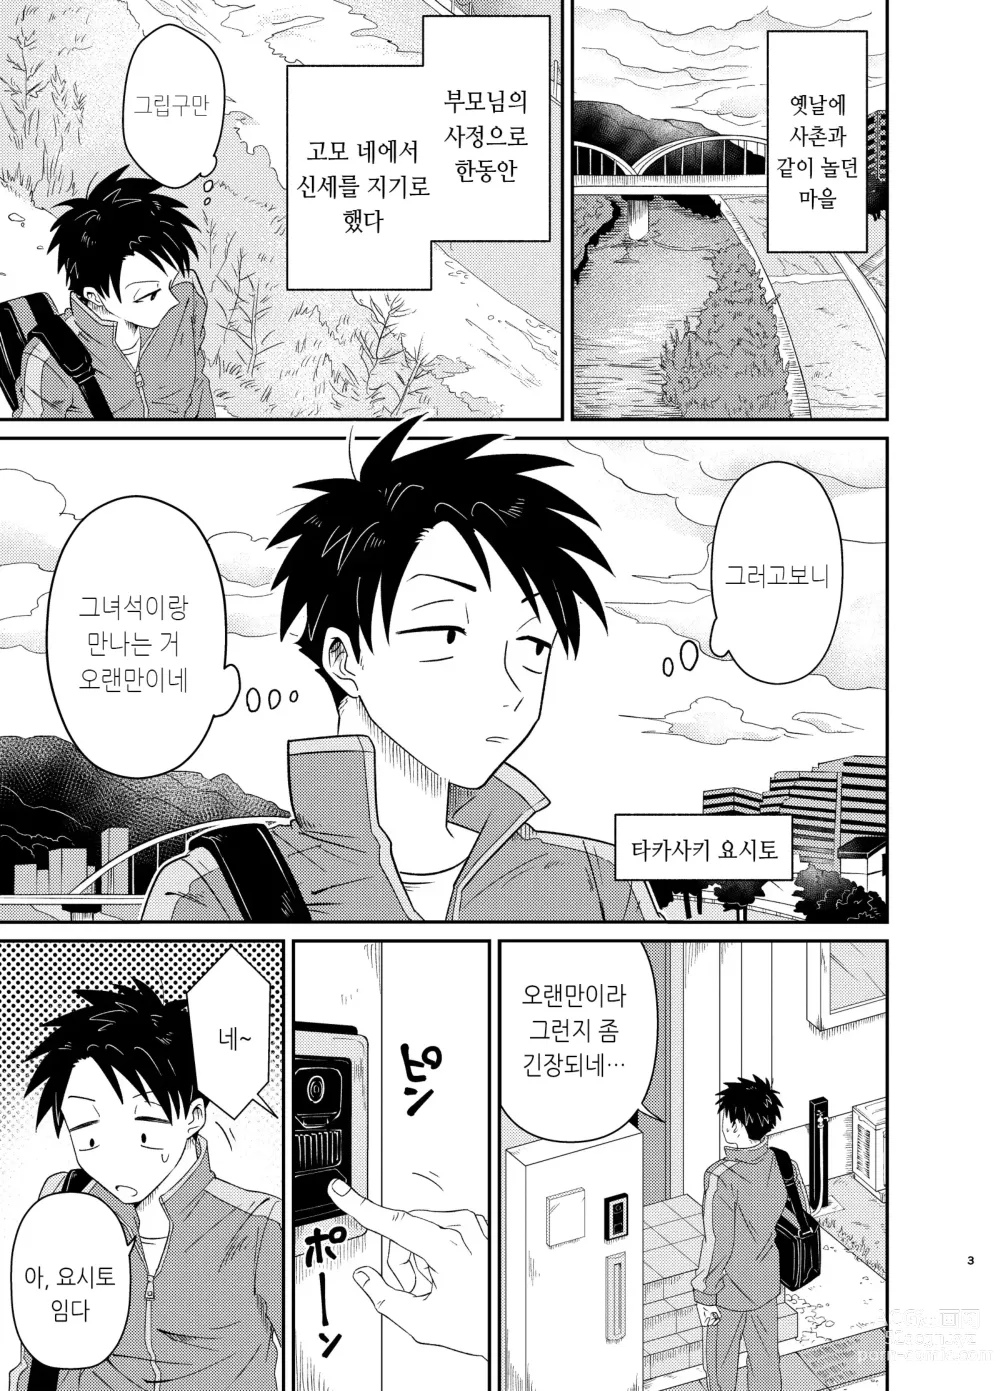 Page 3 of doujinshi 엄청 귀엽고 야한 사촌은 좋아하세요?